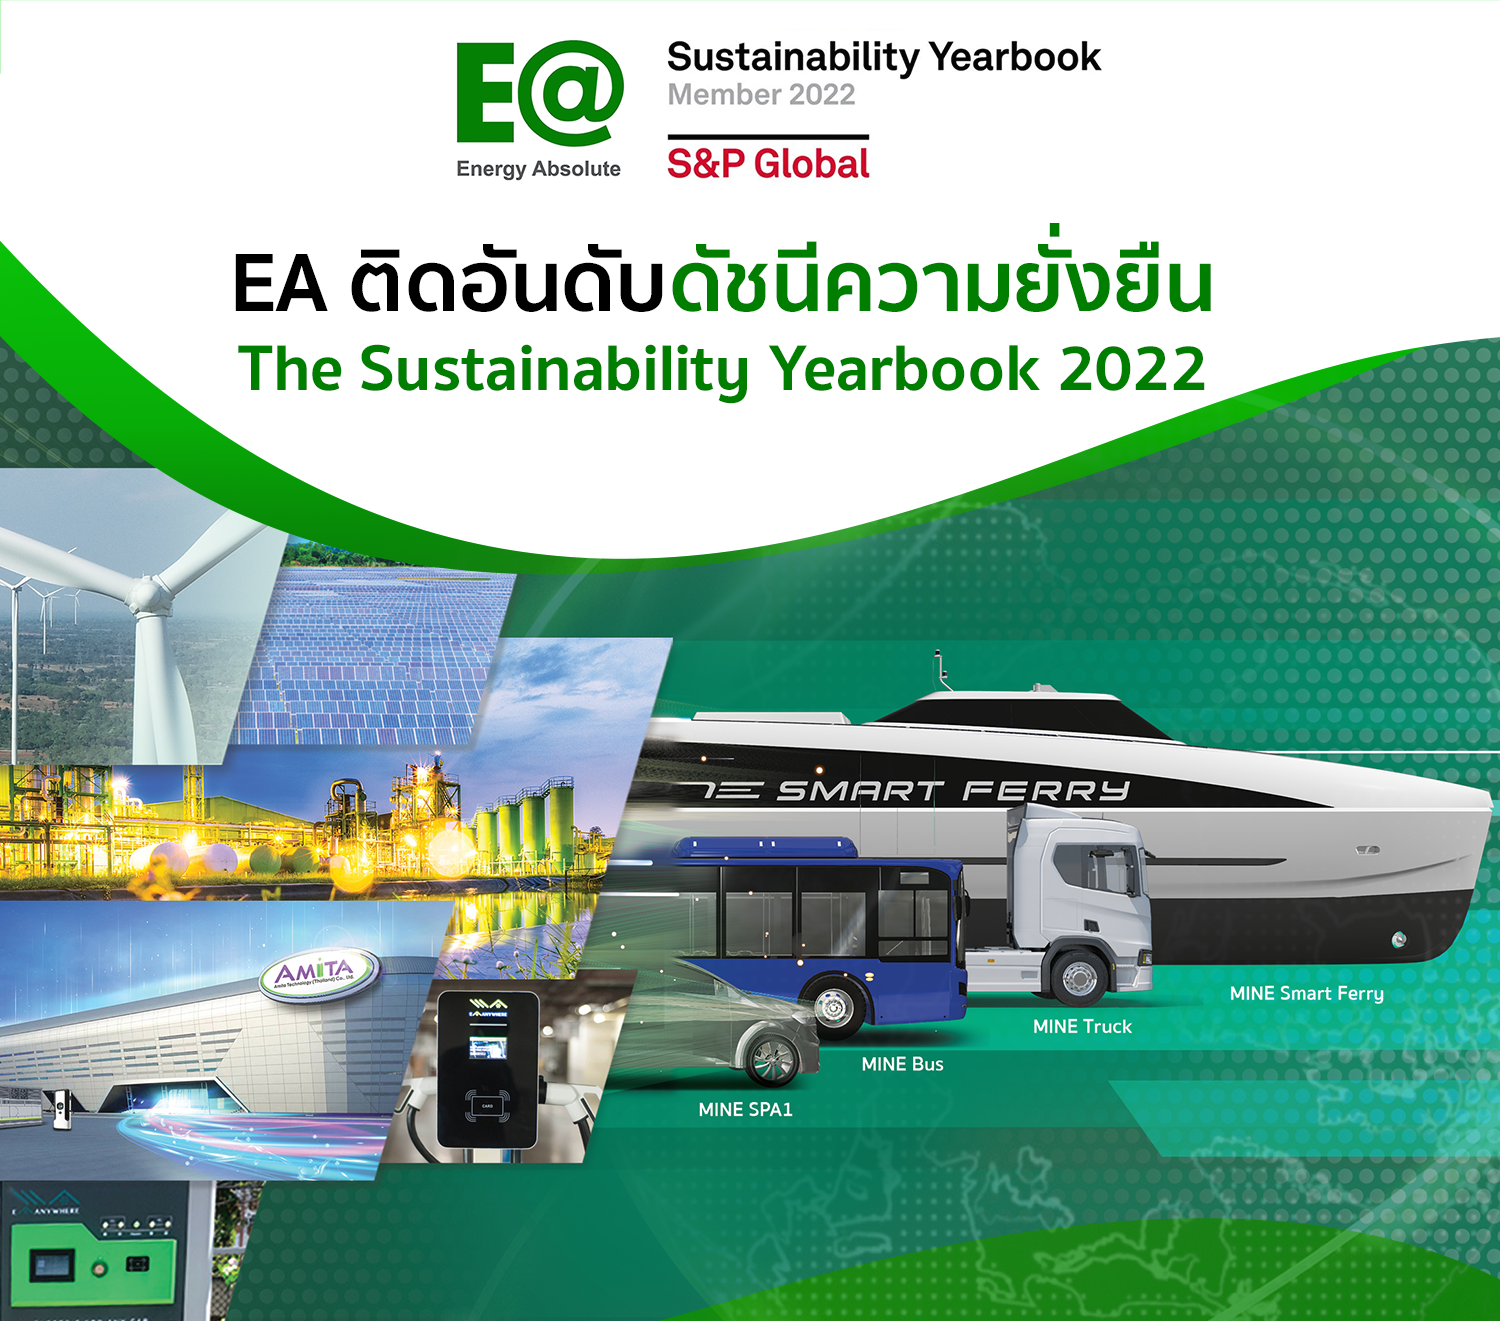 EA ปลื้ม! ติดอันดับดัชนีความยั่งยืนระดับสากล "The Sustainability Yearbook 2022" ระดับ Member จาก S&P Global ตอกย้ำเชื่อมั่นนักลงทุนทั้งสถาบันไทยและต่างประเทศ